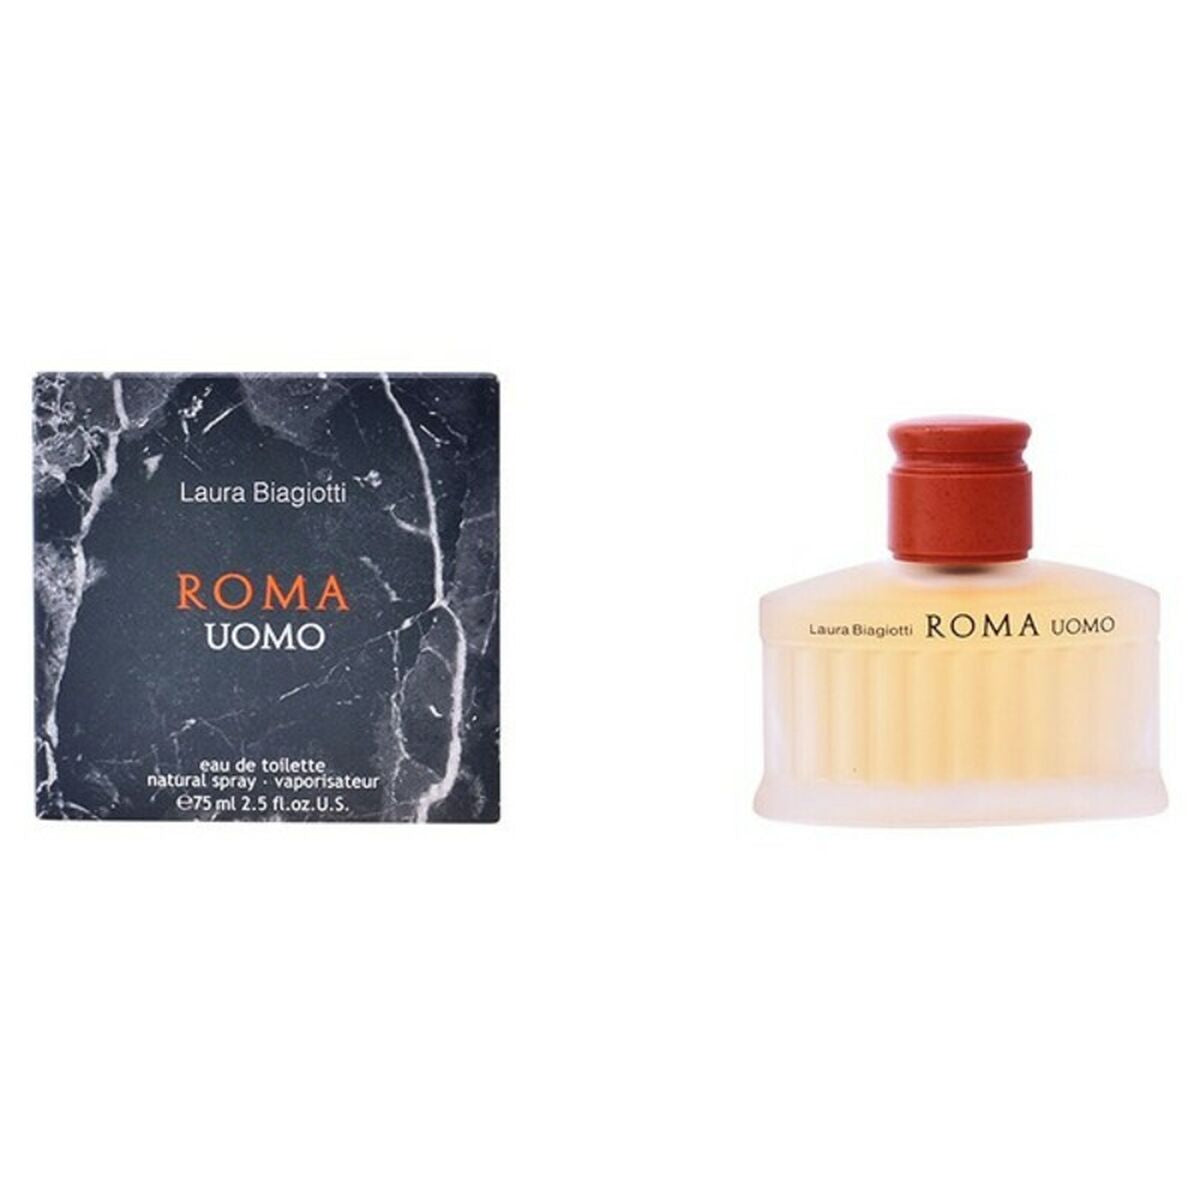 Bricini Biagiotti Cosmetics – Roma Men\'s EDT Uomo Perfume Laura